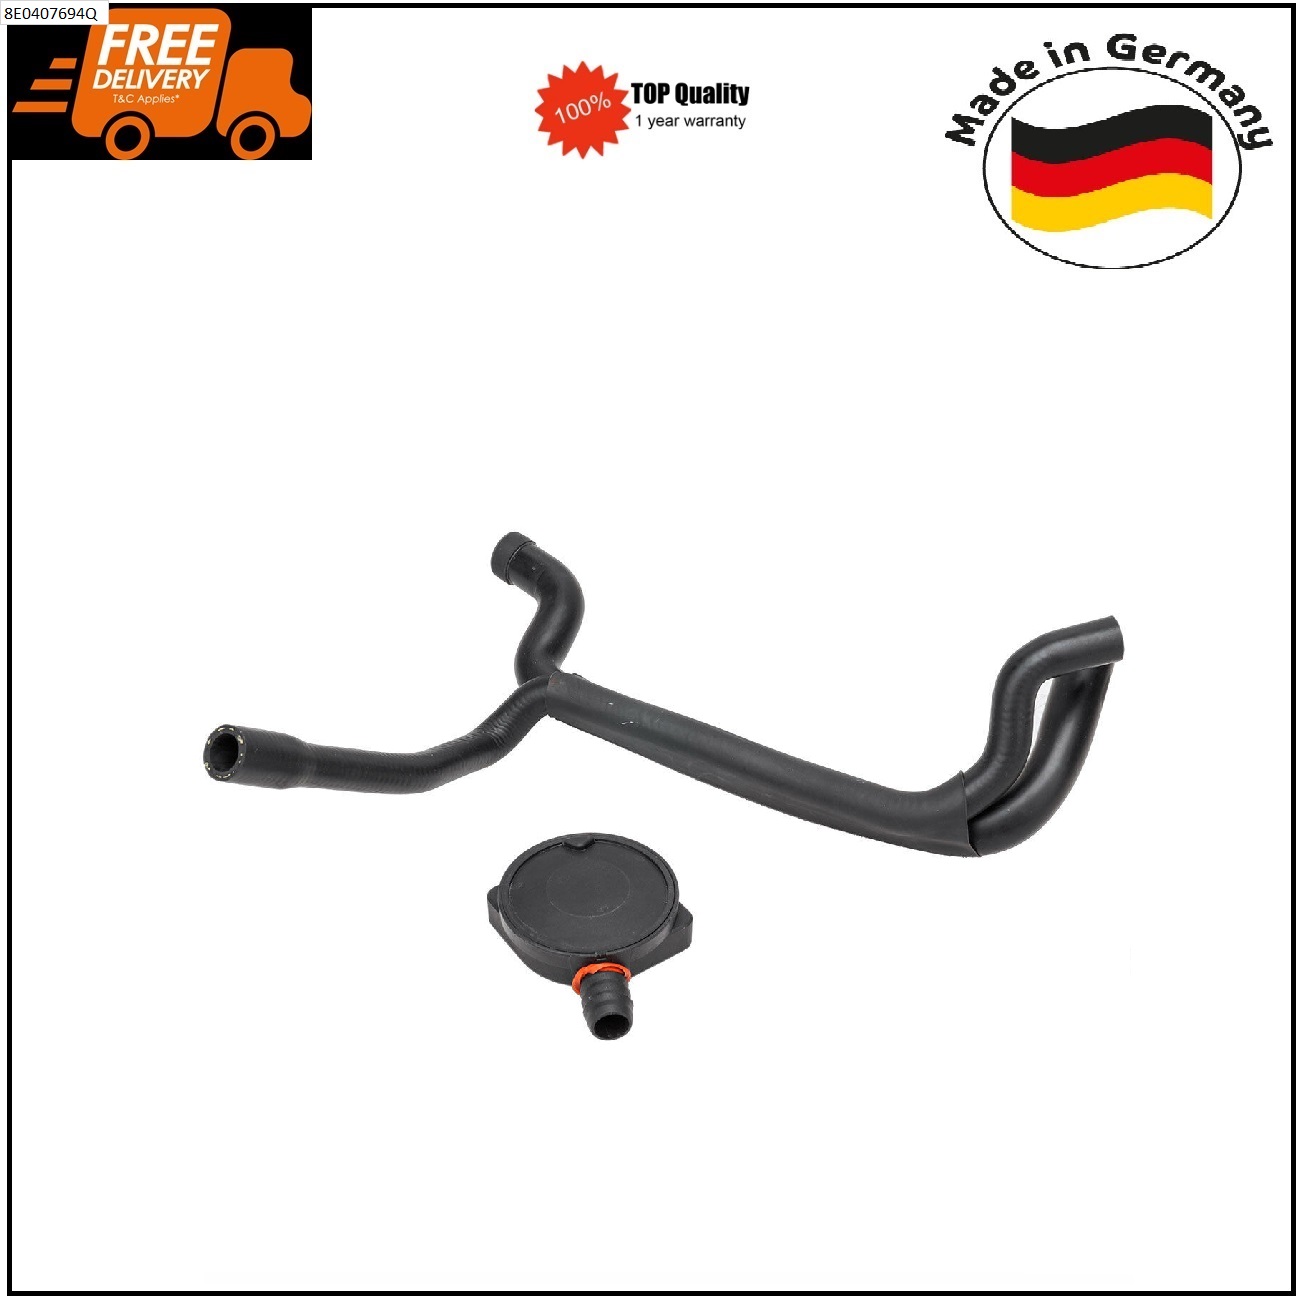 Breather Hose Valve Kit for BMW E36 E46 316i 318is 11151247743 11157501567 German Made